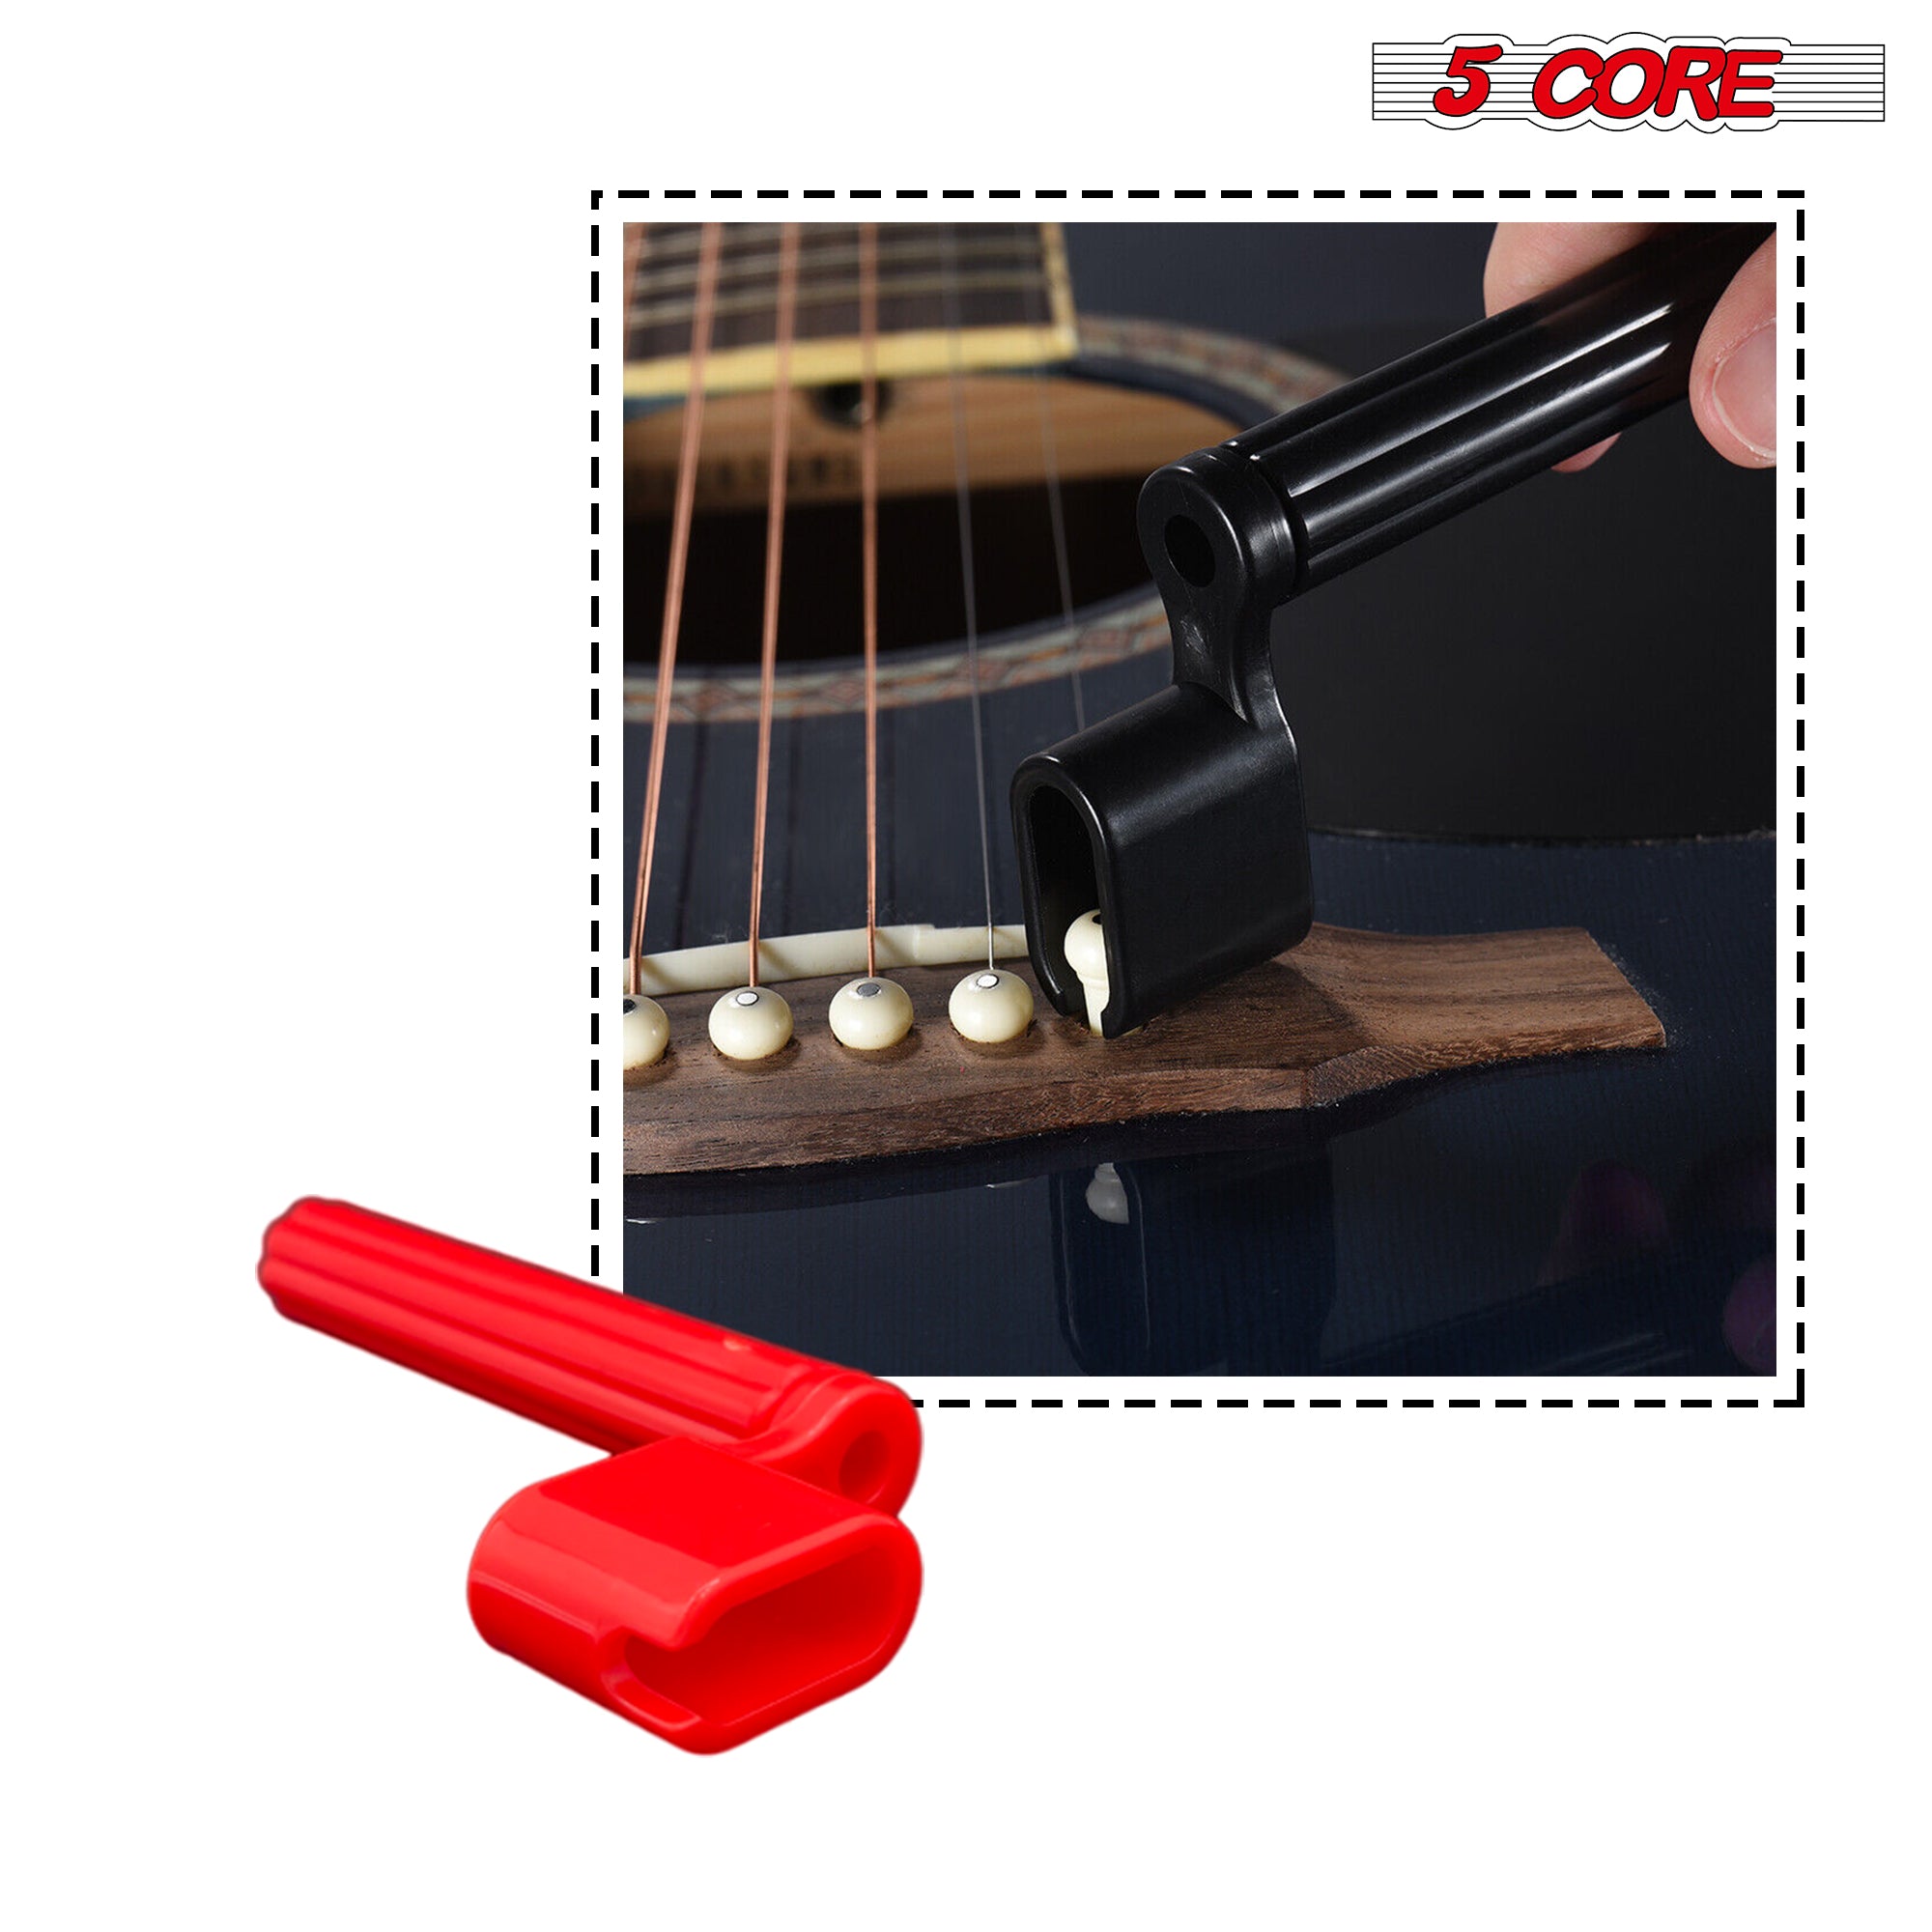 5 Core Guitar String Winder 6Pack Peg Winder Bridge Pin Tools for Acoustic Classical Electric Guitar